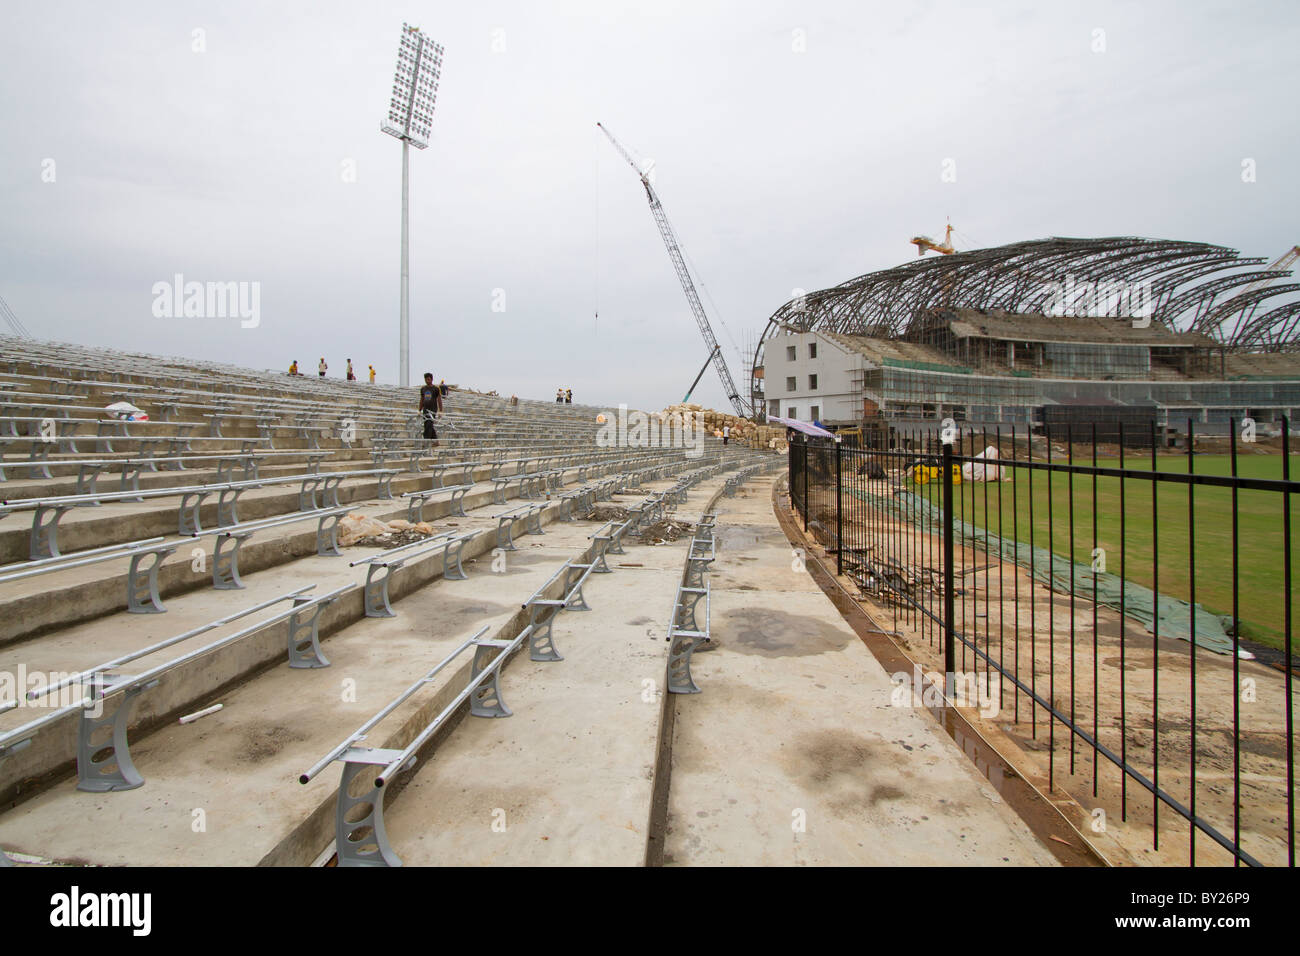 Mahinda Rajapakse International Cricket Stadium at Sooriyawewa, Hambantota, ICC World Cup venue photo taken on 10th Jan 2010. Stock Photo